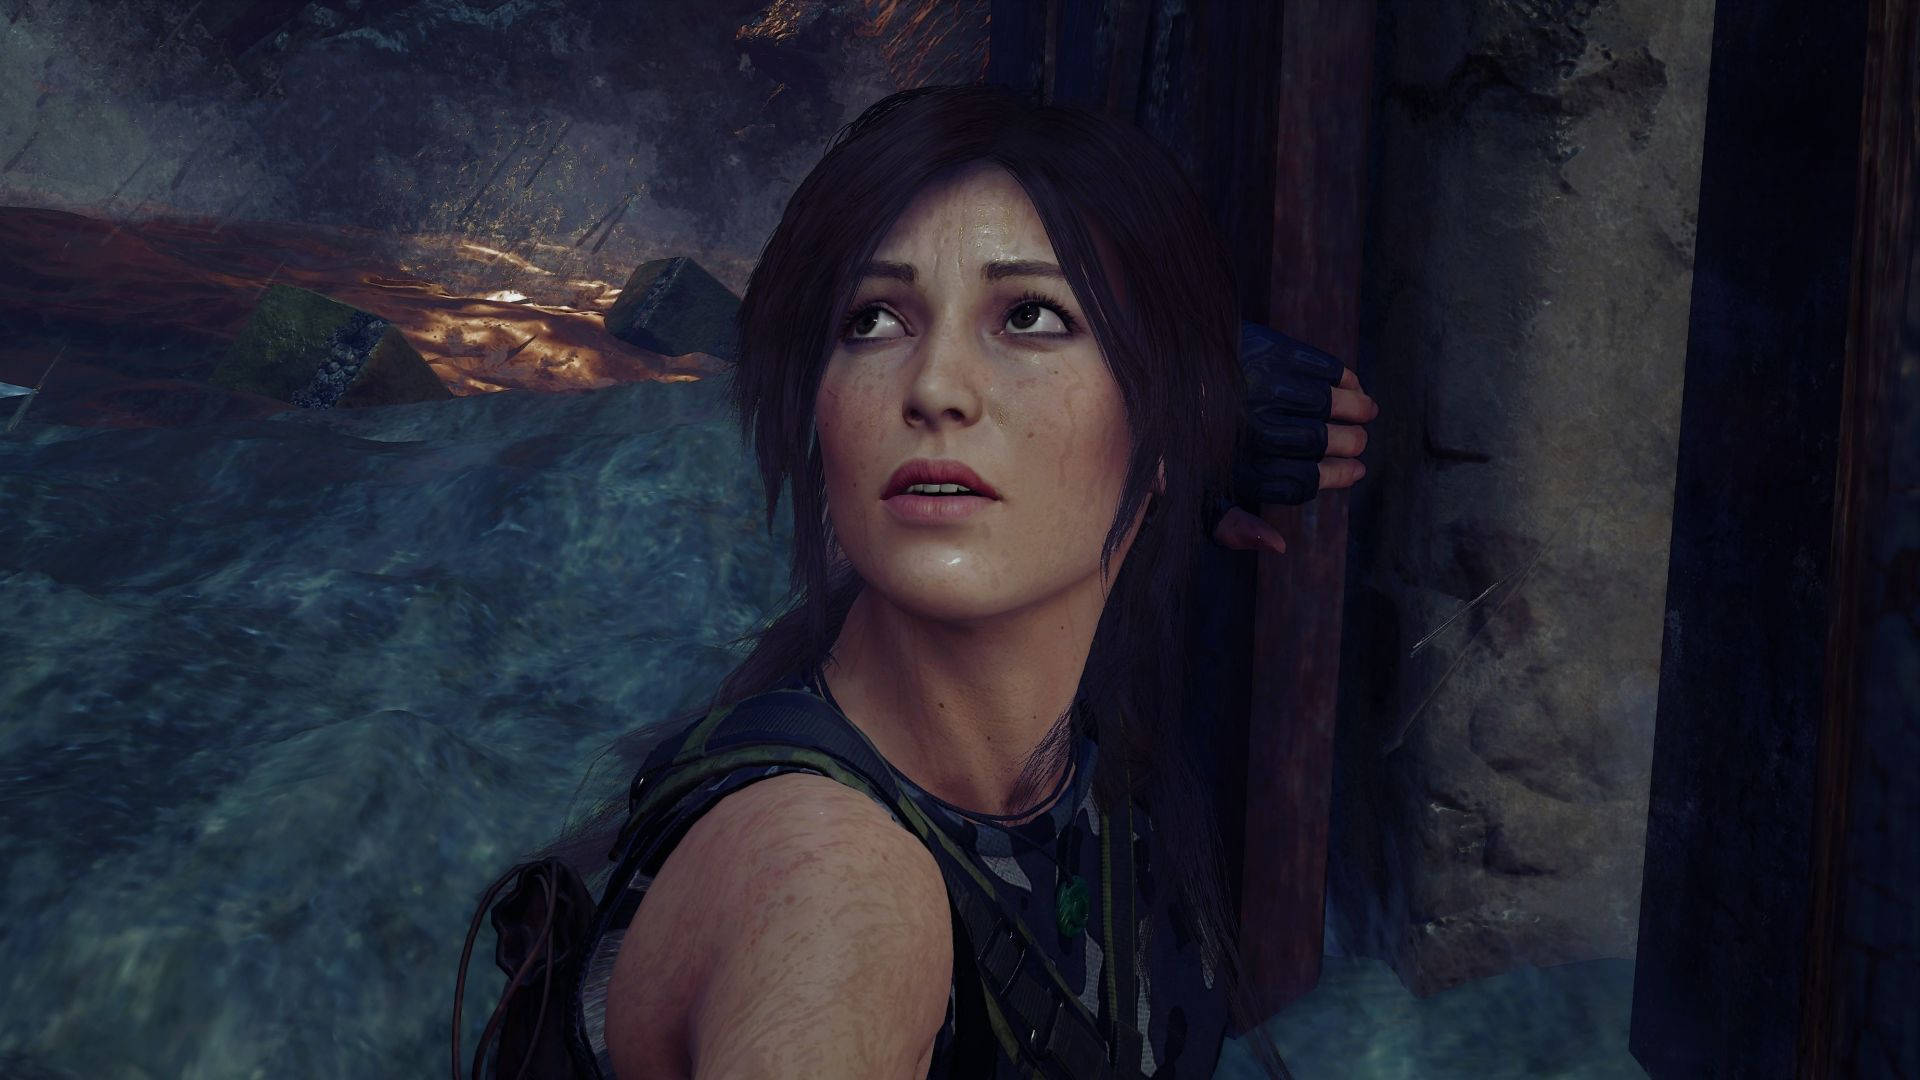 Personajeprincipal Del Juego Tomb Raider: Lara Croft Fondo de pantalla